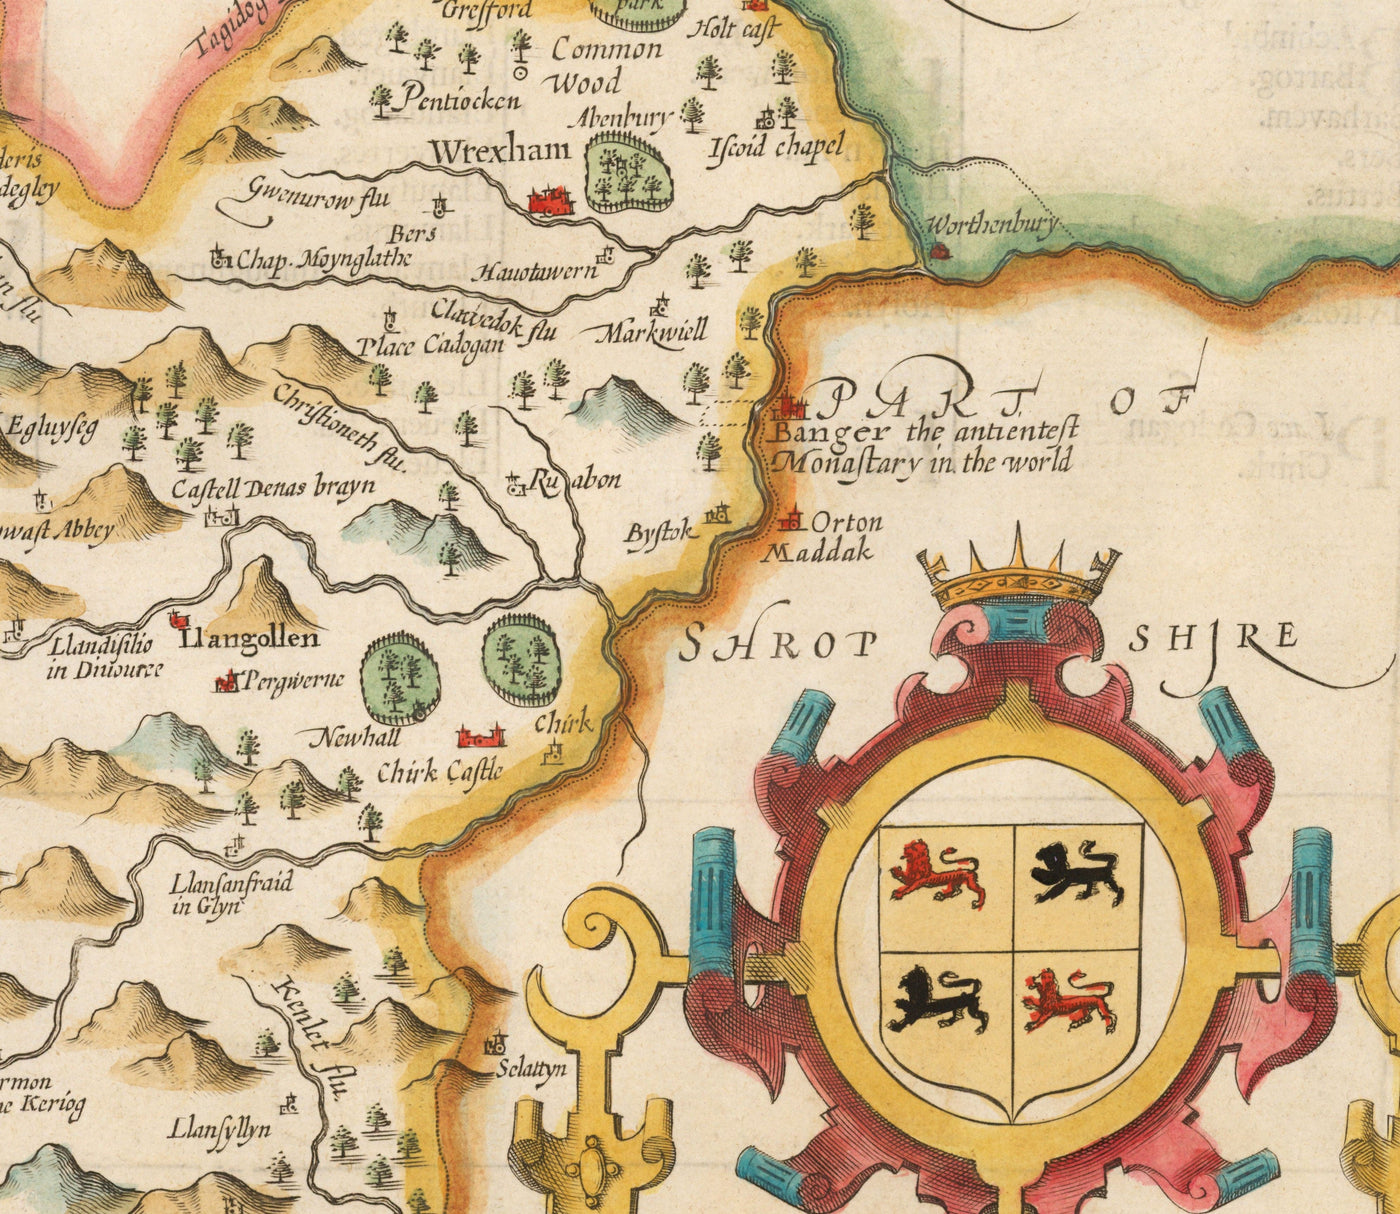 Old Map of Denbighshire Wales 1611 by John Speed - Denbigh, Wrexham, Llandudno, Abergele